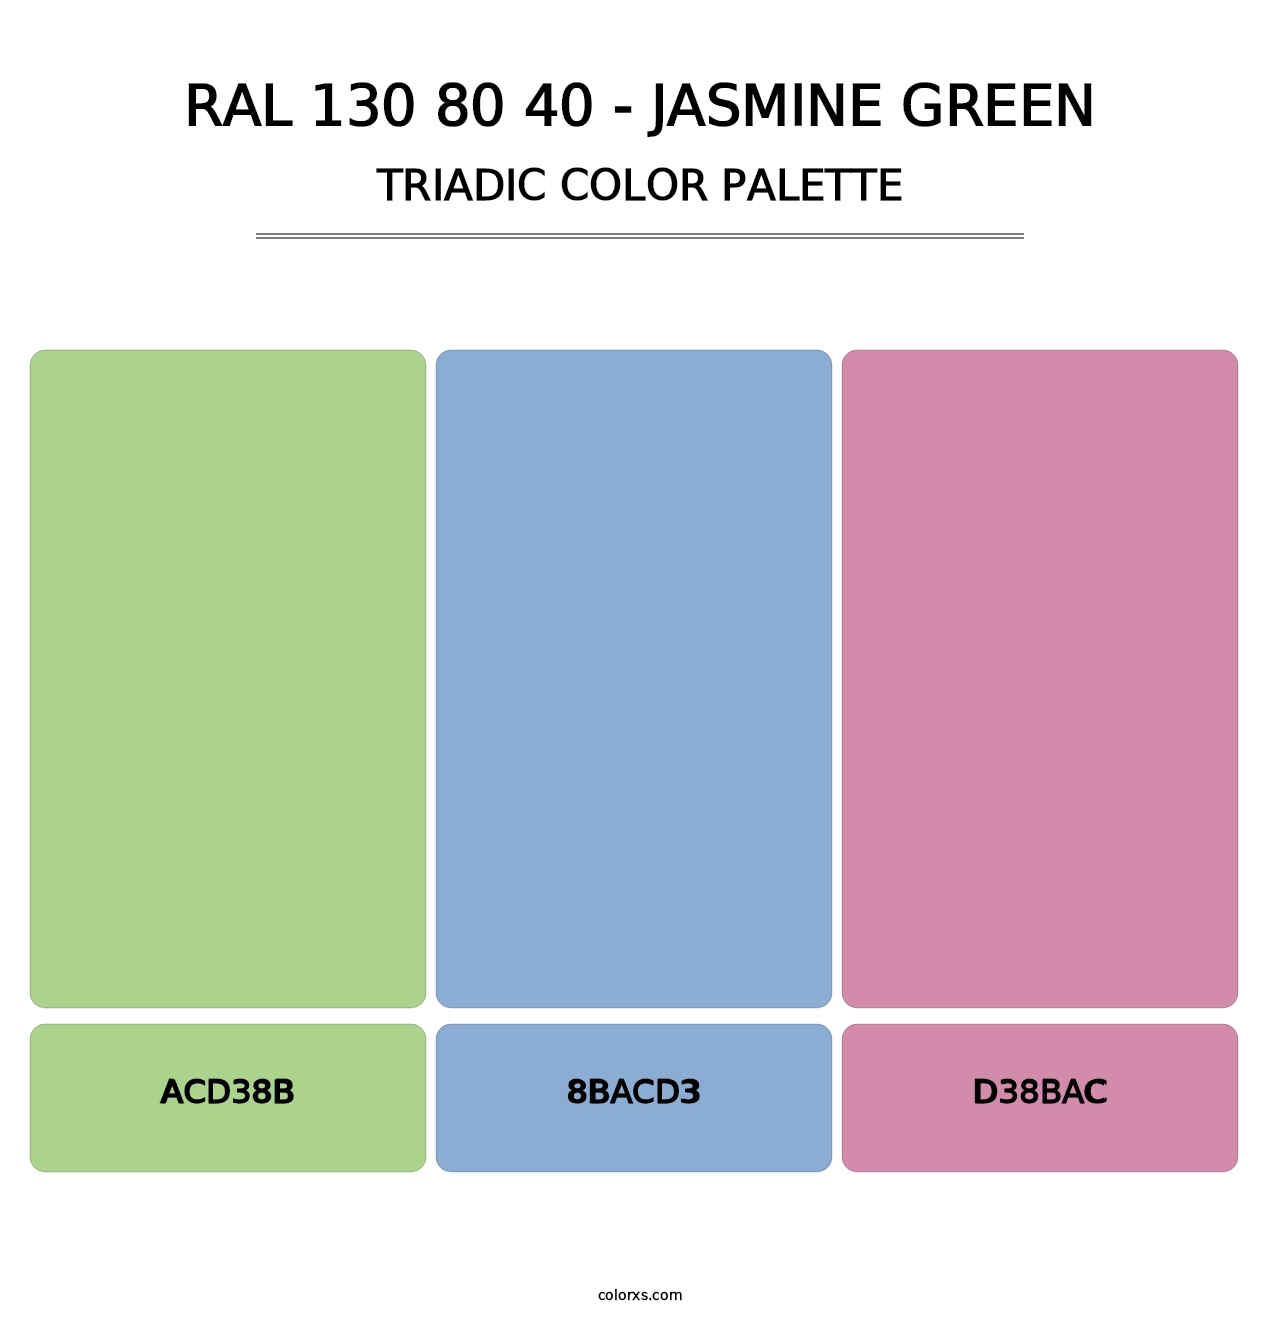 RAL 130 80 40 - Jasmine Green - Triadic Color Palette